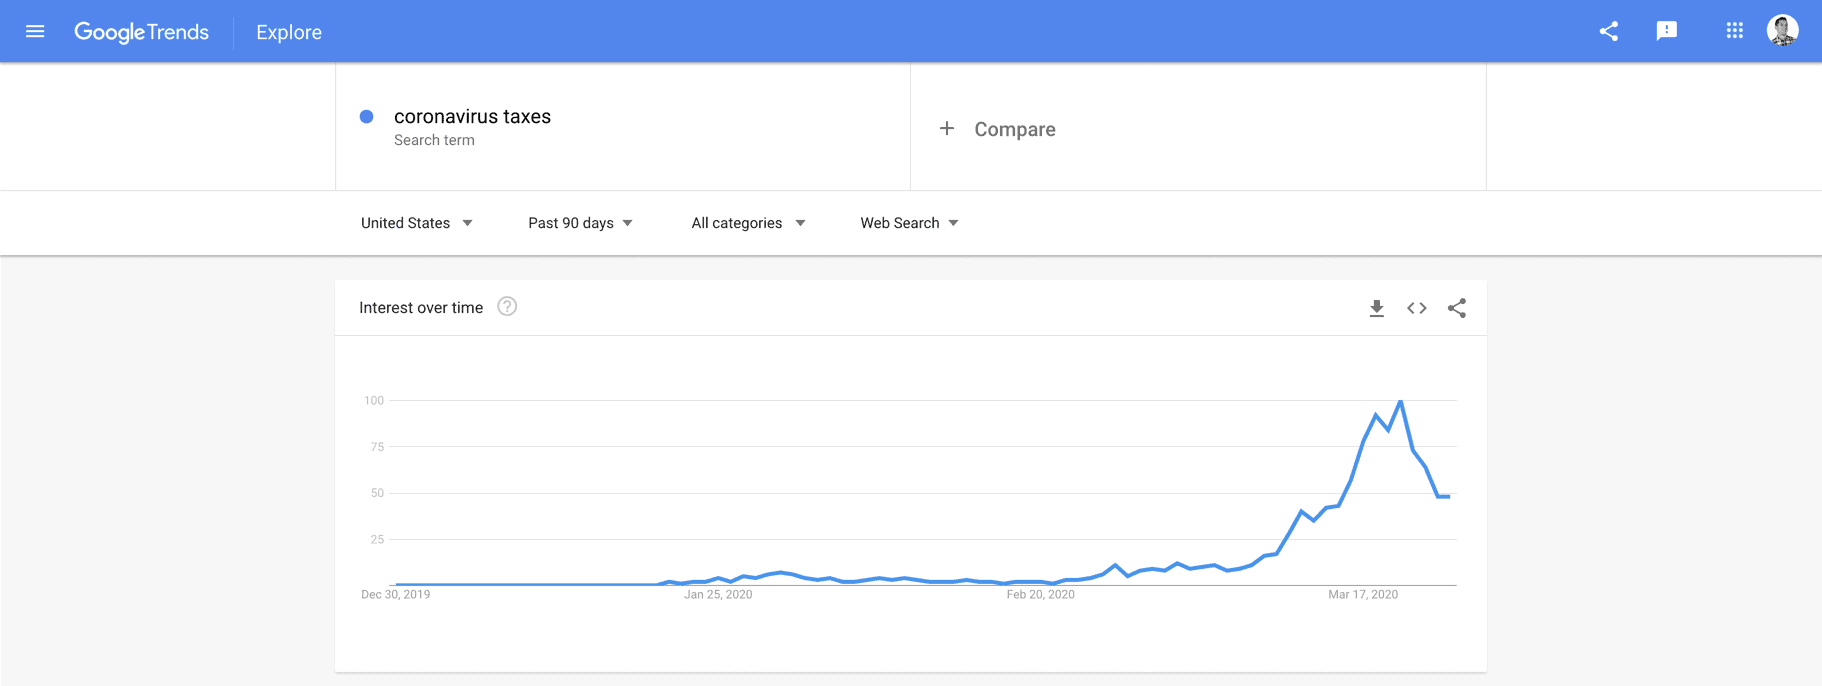 google trends coronavirus taxes is trending up